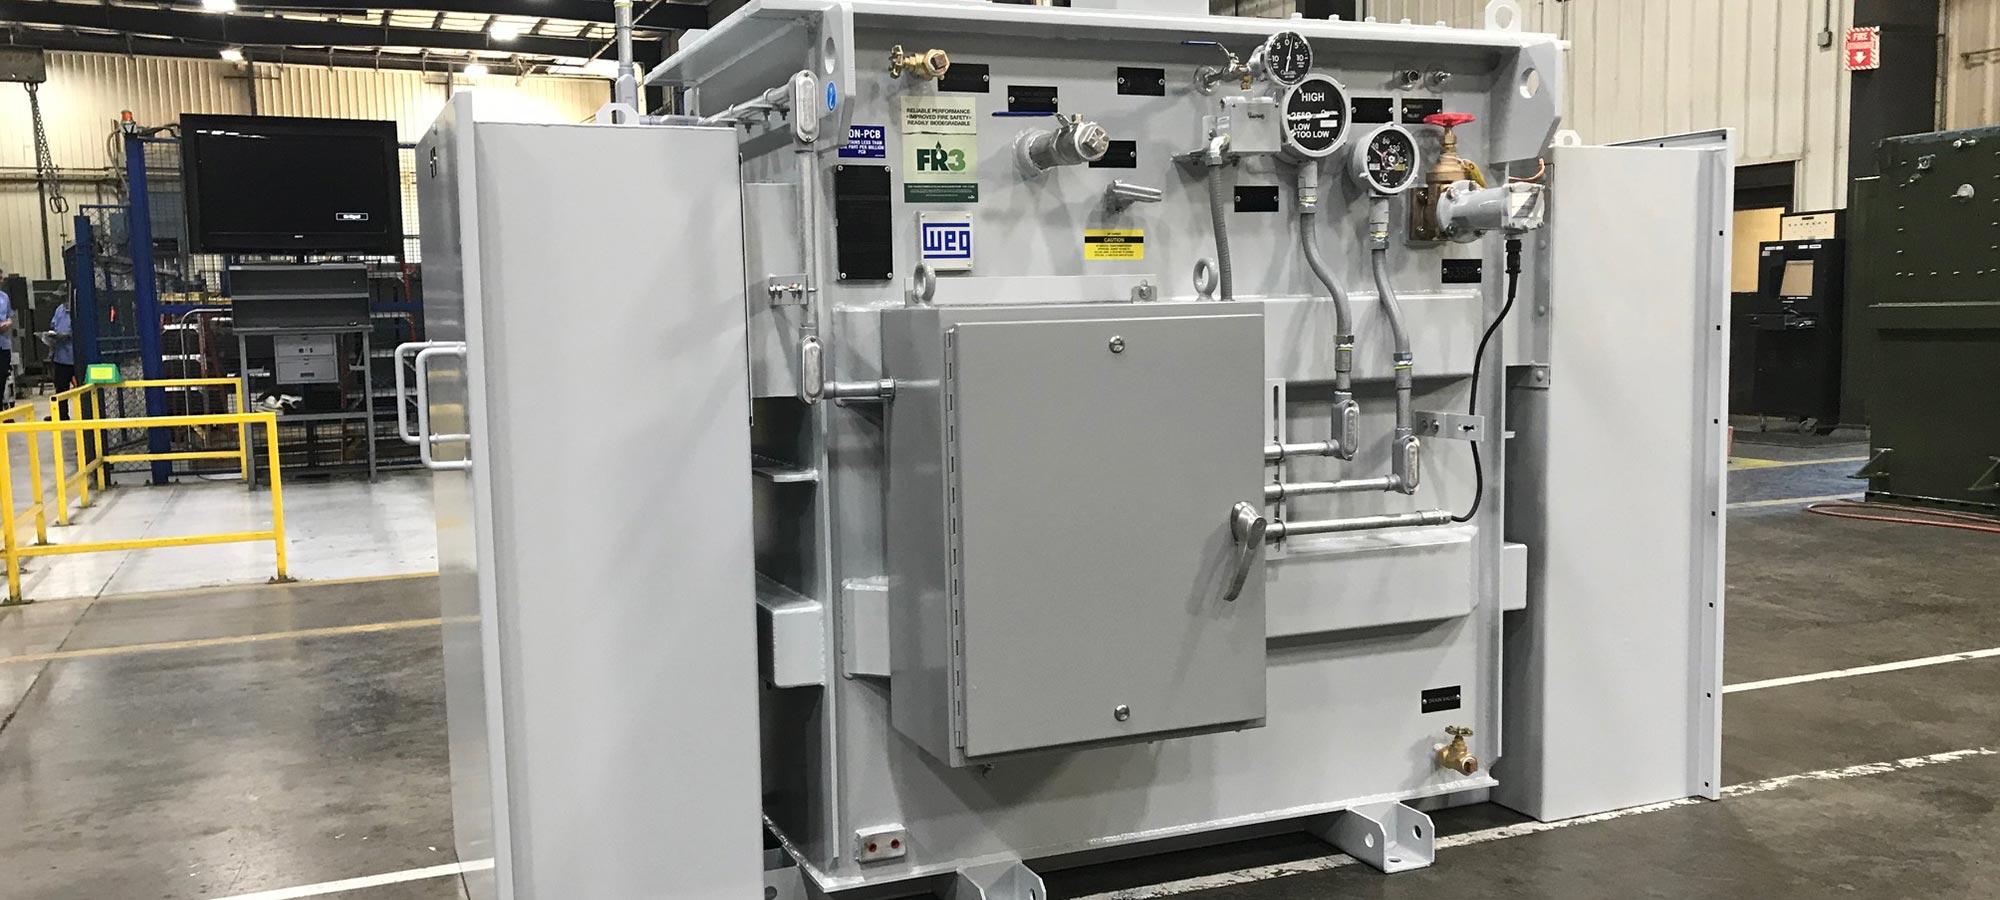 Product WEG Distribution Transformers: Secondary Substation Units image